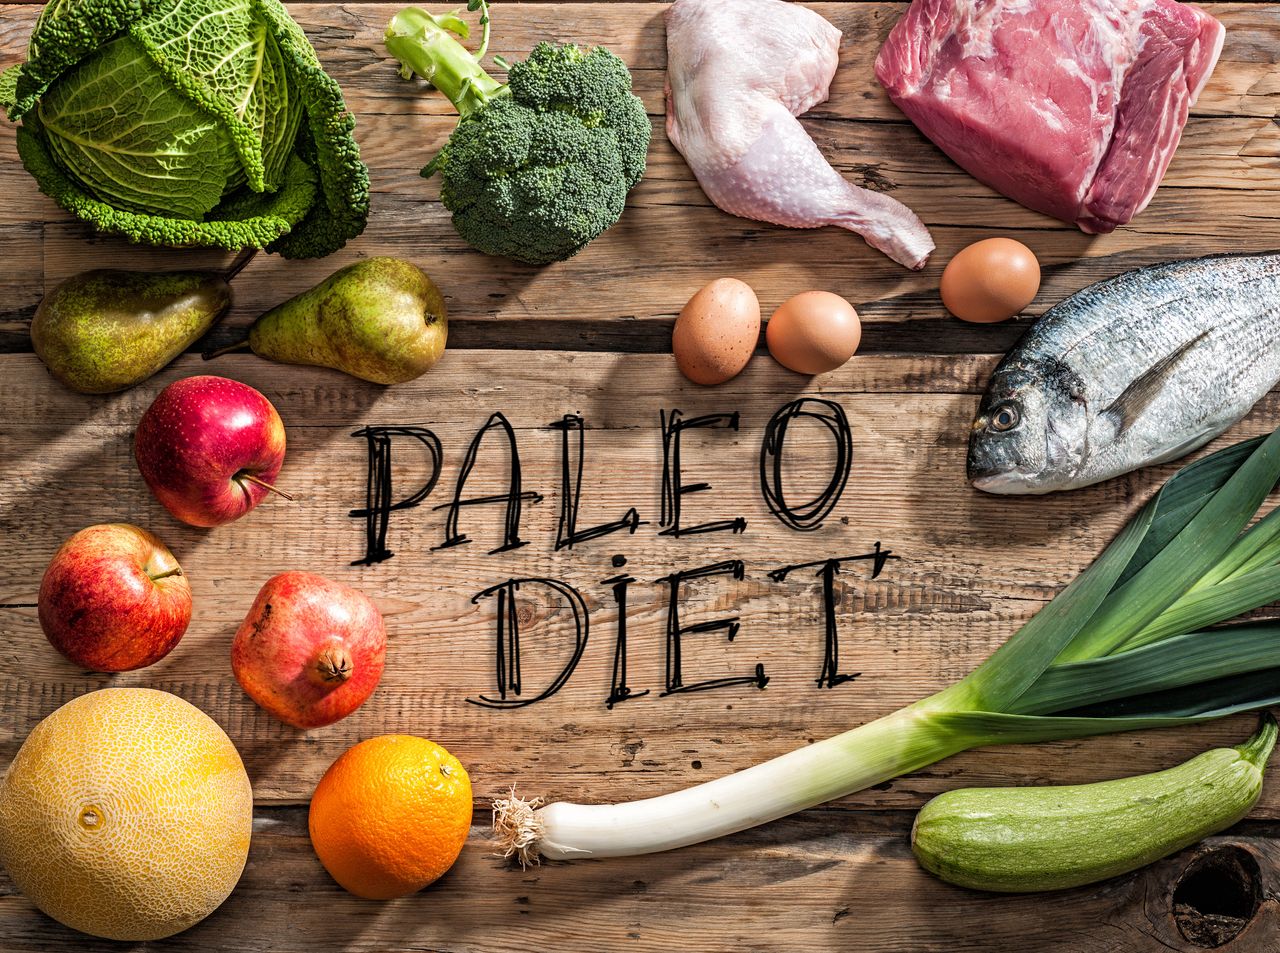 The Paleos diet